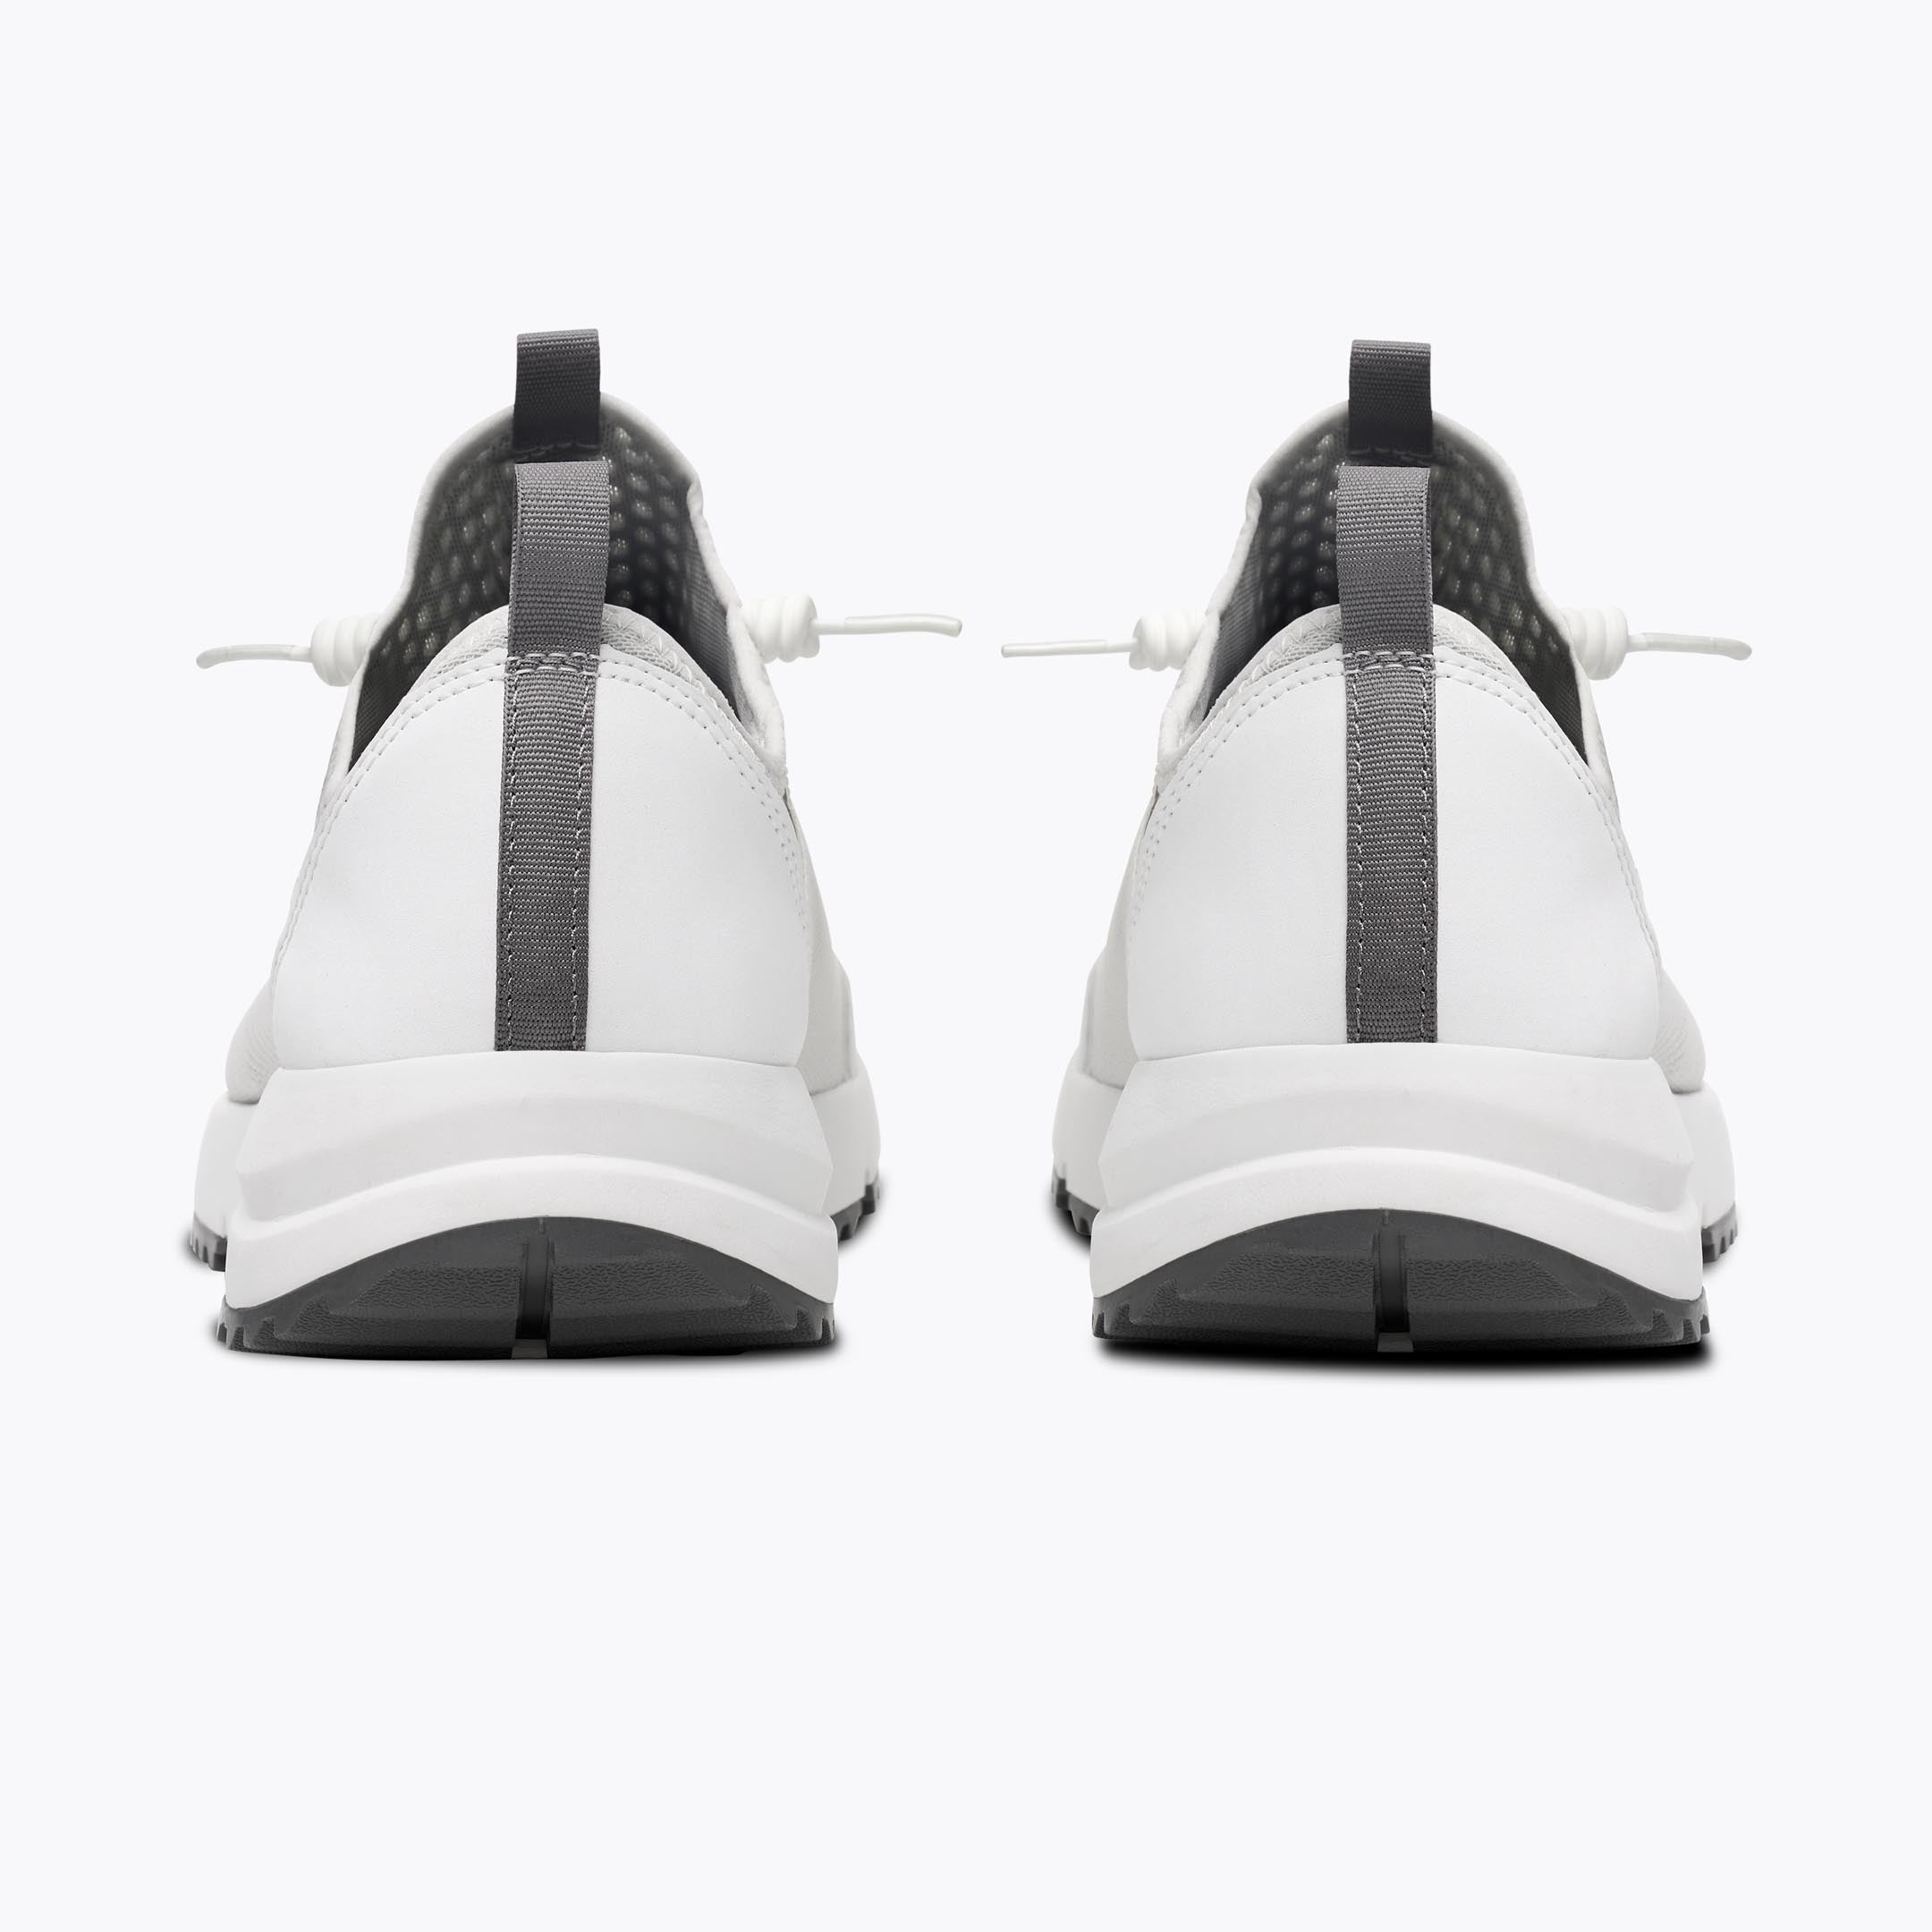 All-Terrain - Sneaker for Any Type of Journey